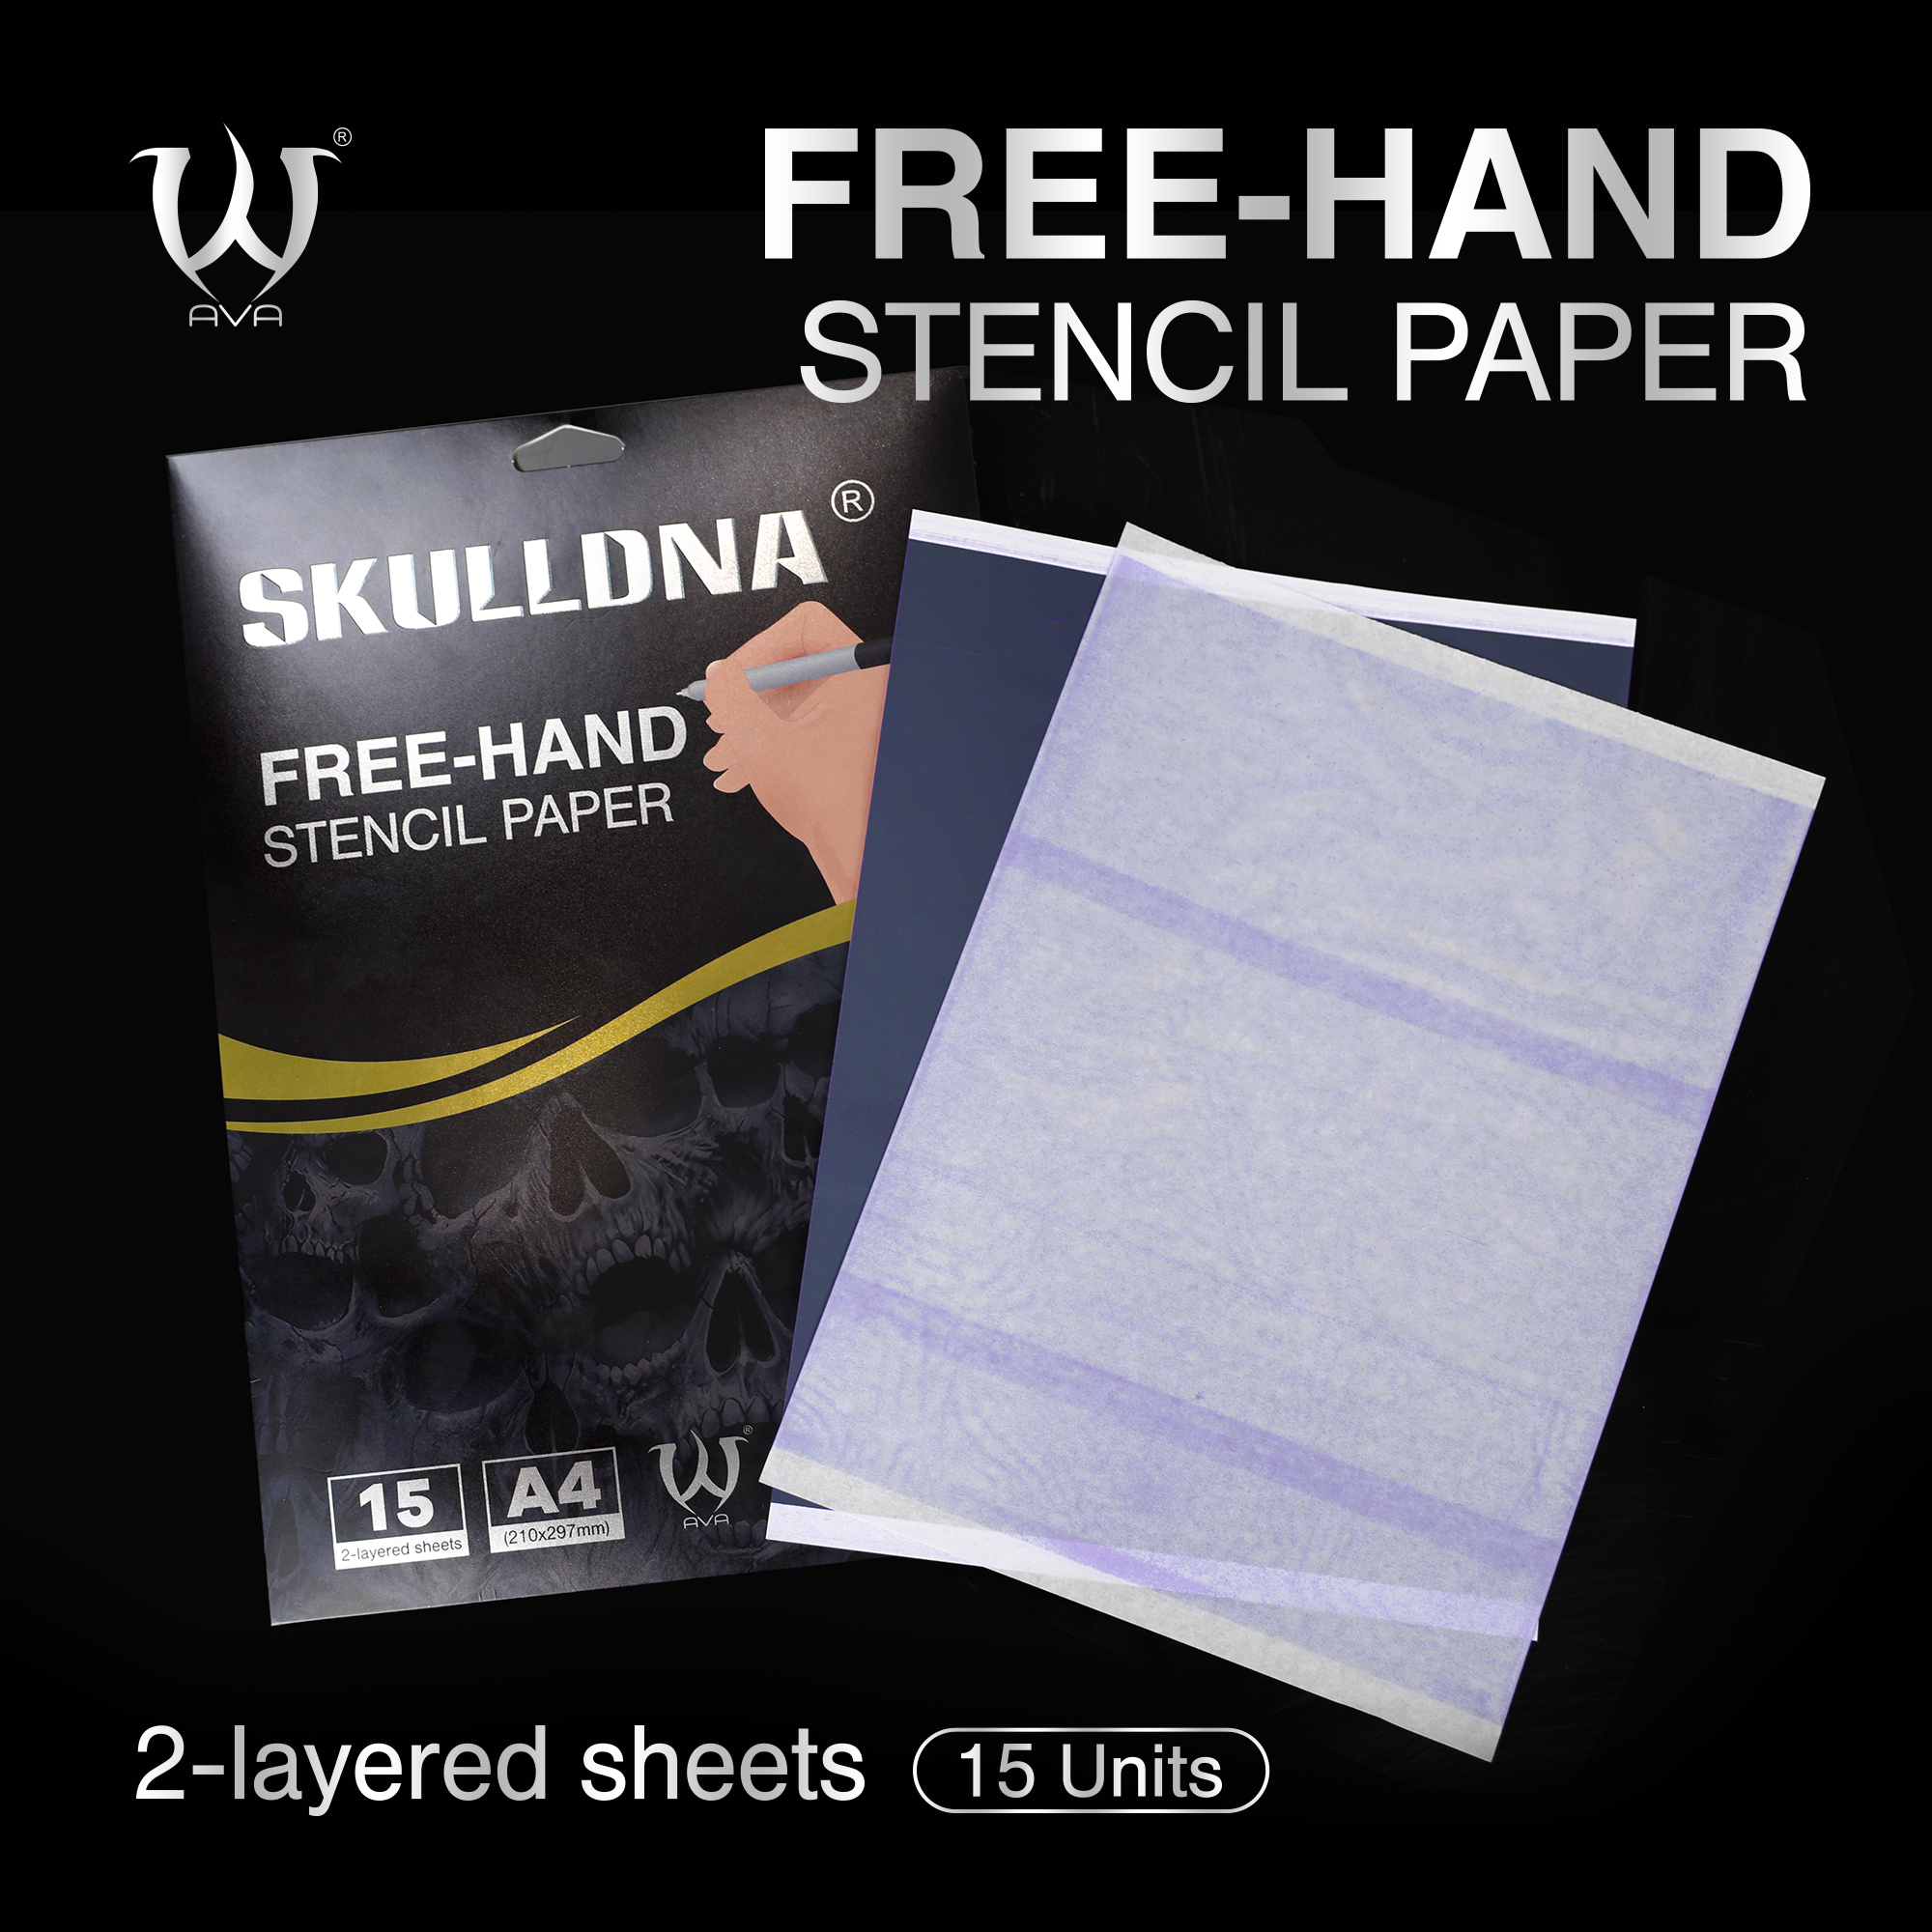 SKULLDNA Free-Hand Stencil Paper